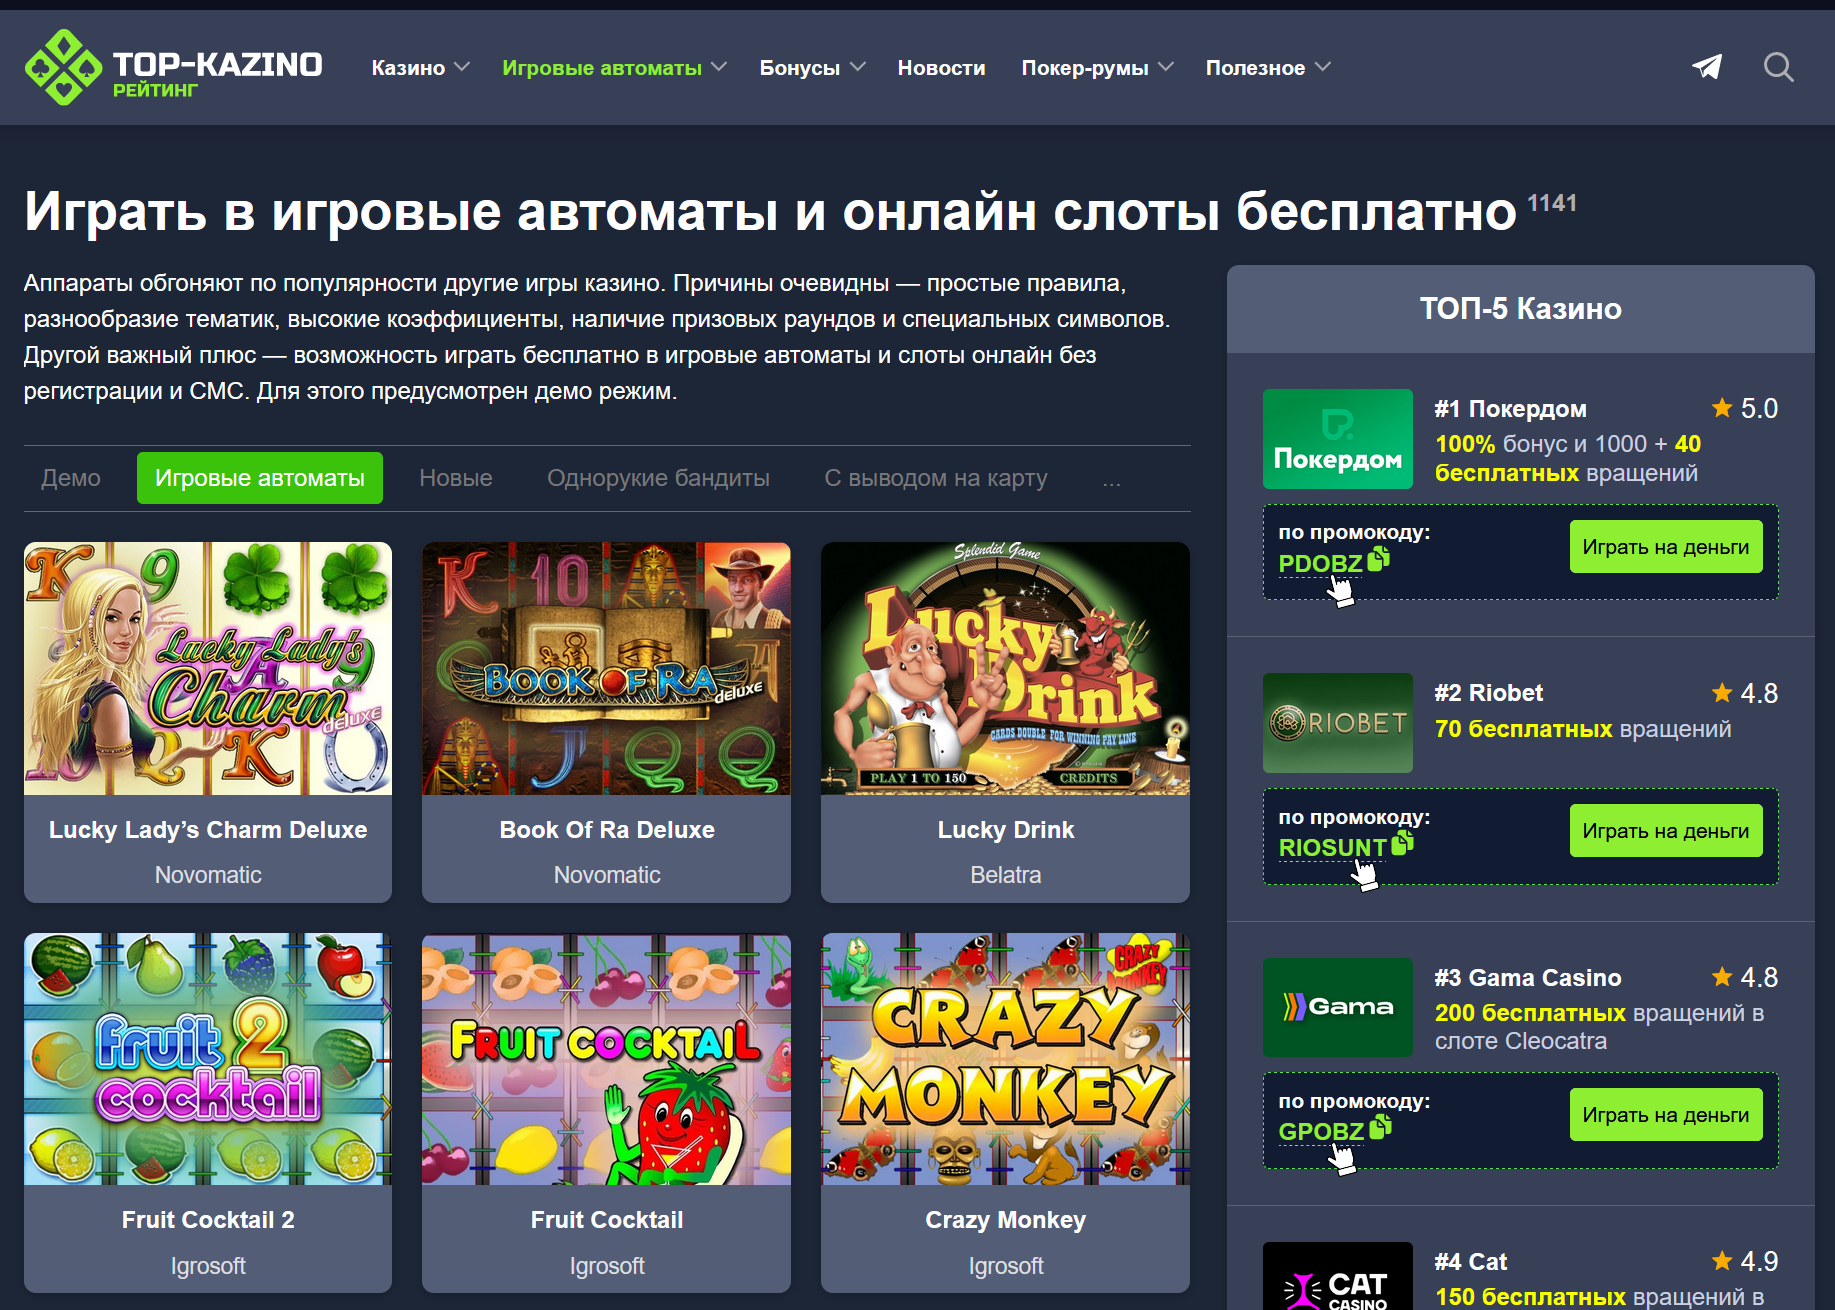 Full version of Android Casino table games game apk Игровые автоматы: как выбрать слот для игры? for tablet and phone.